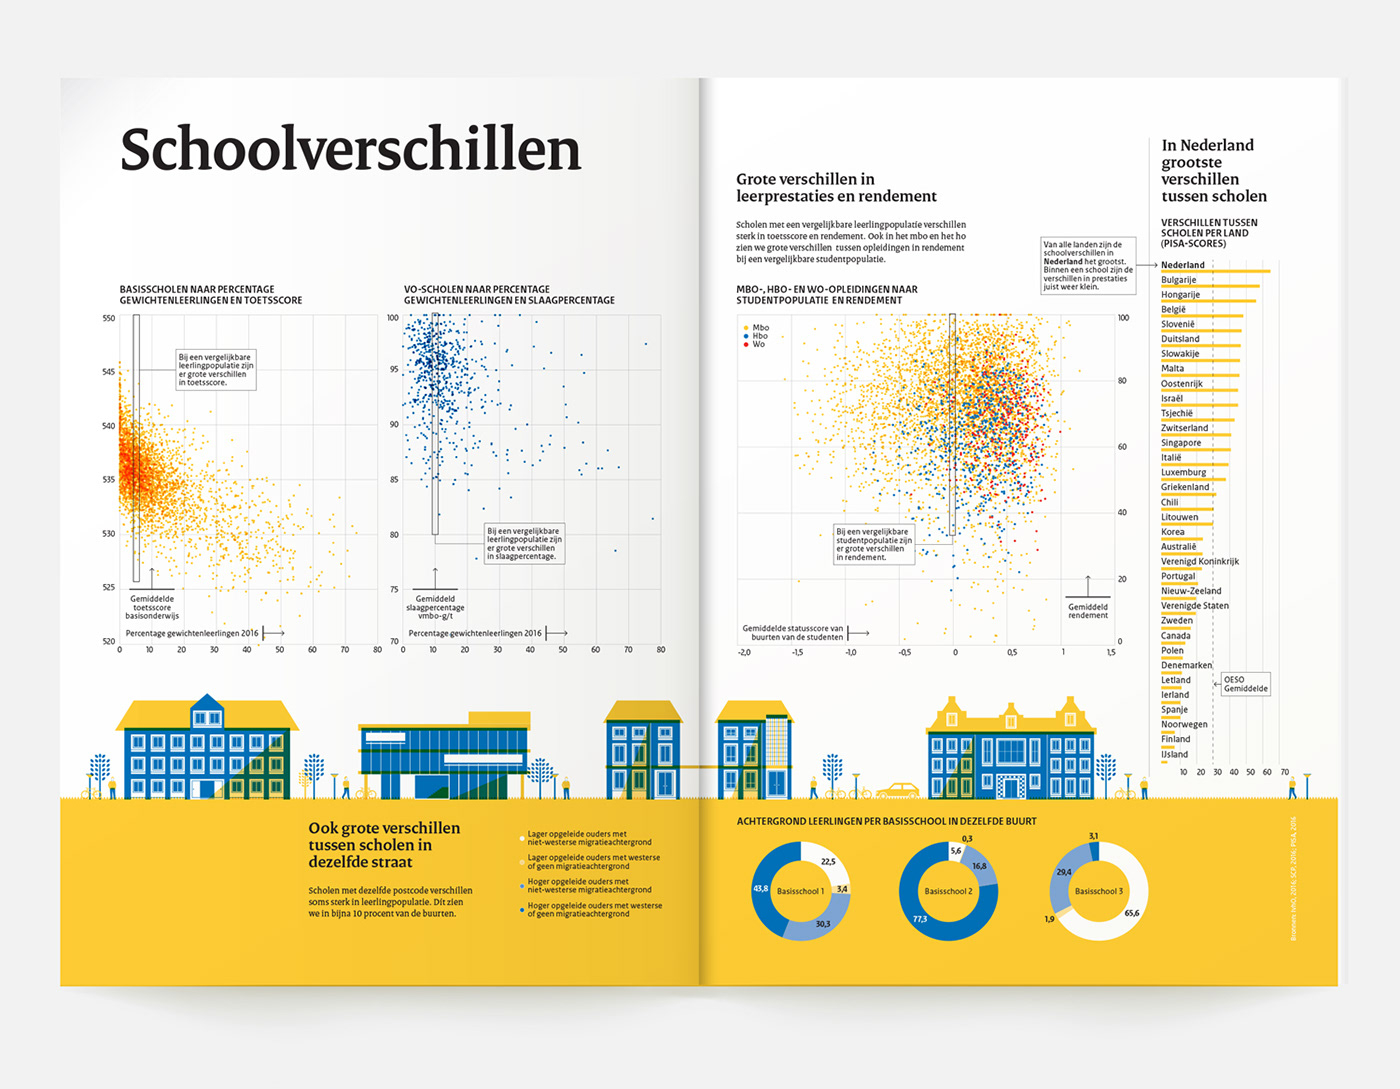 infographic information design ILLUSTRATION  data visualisation data visualization Data Story telling graphic design  Education storytelling  